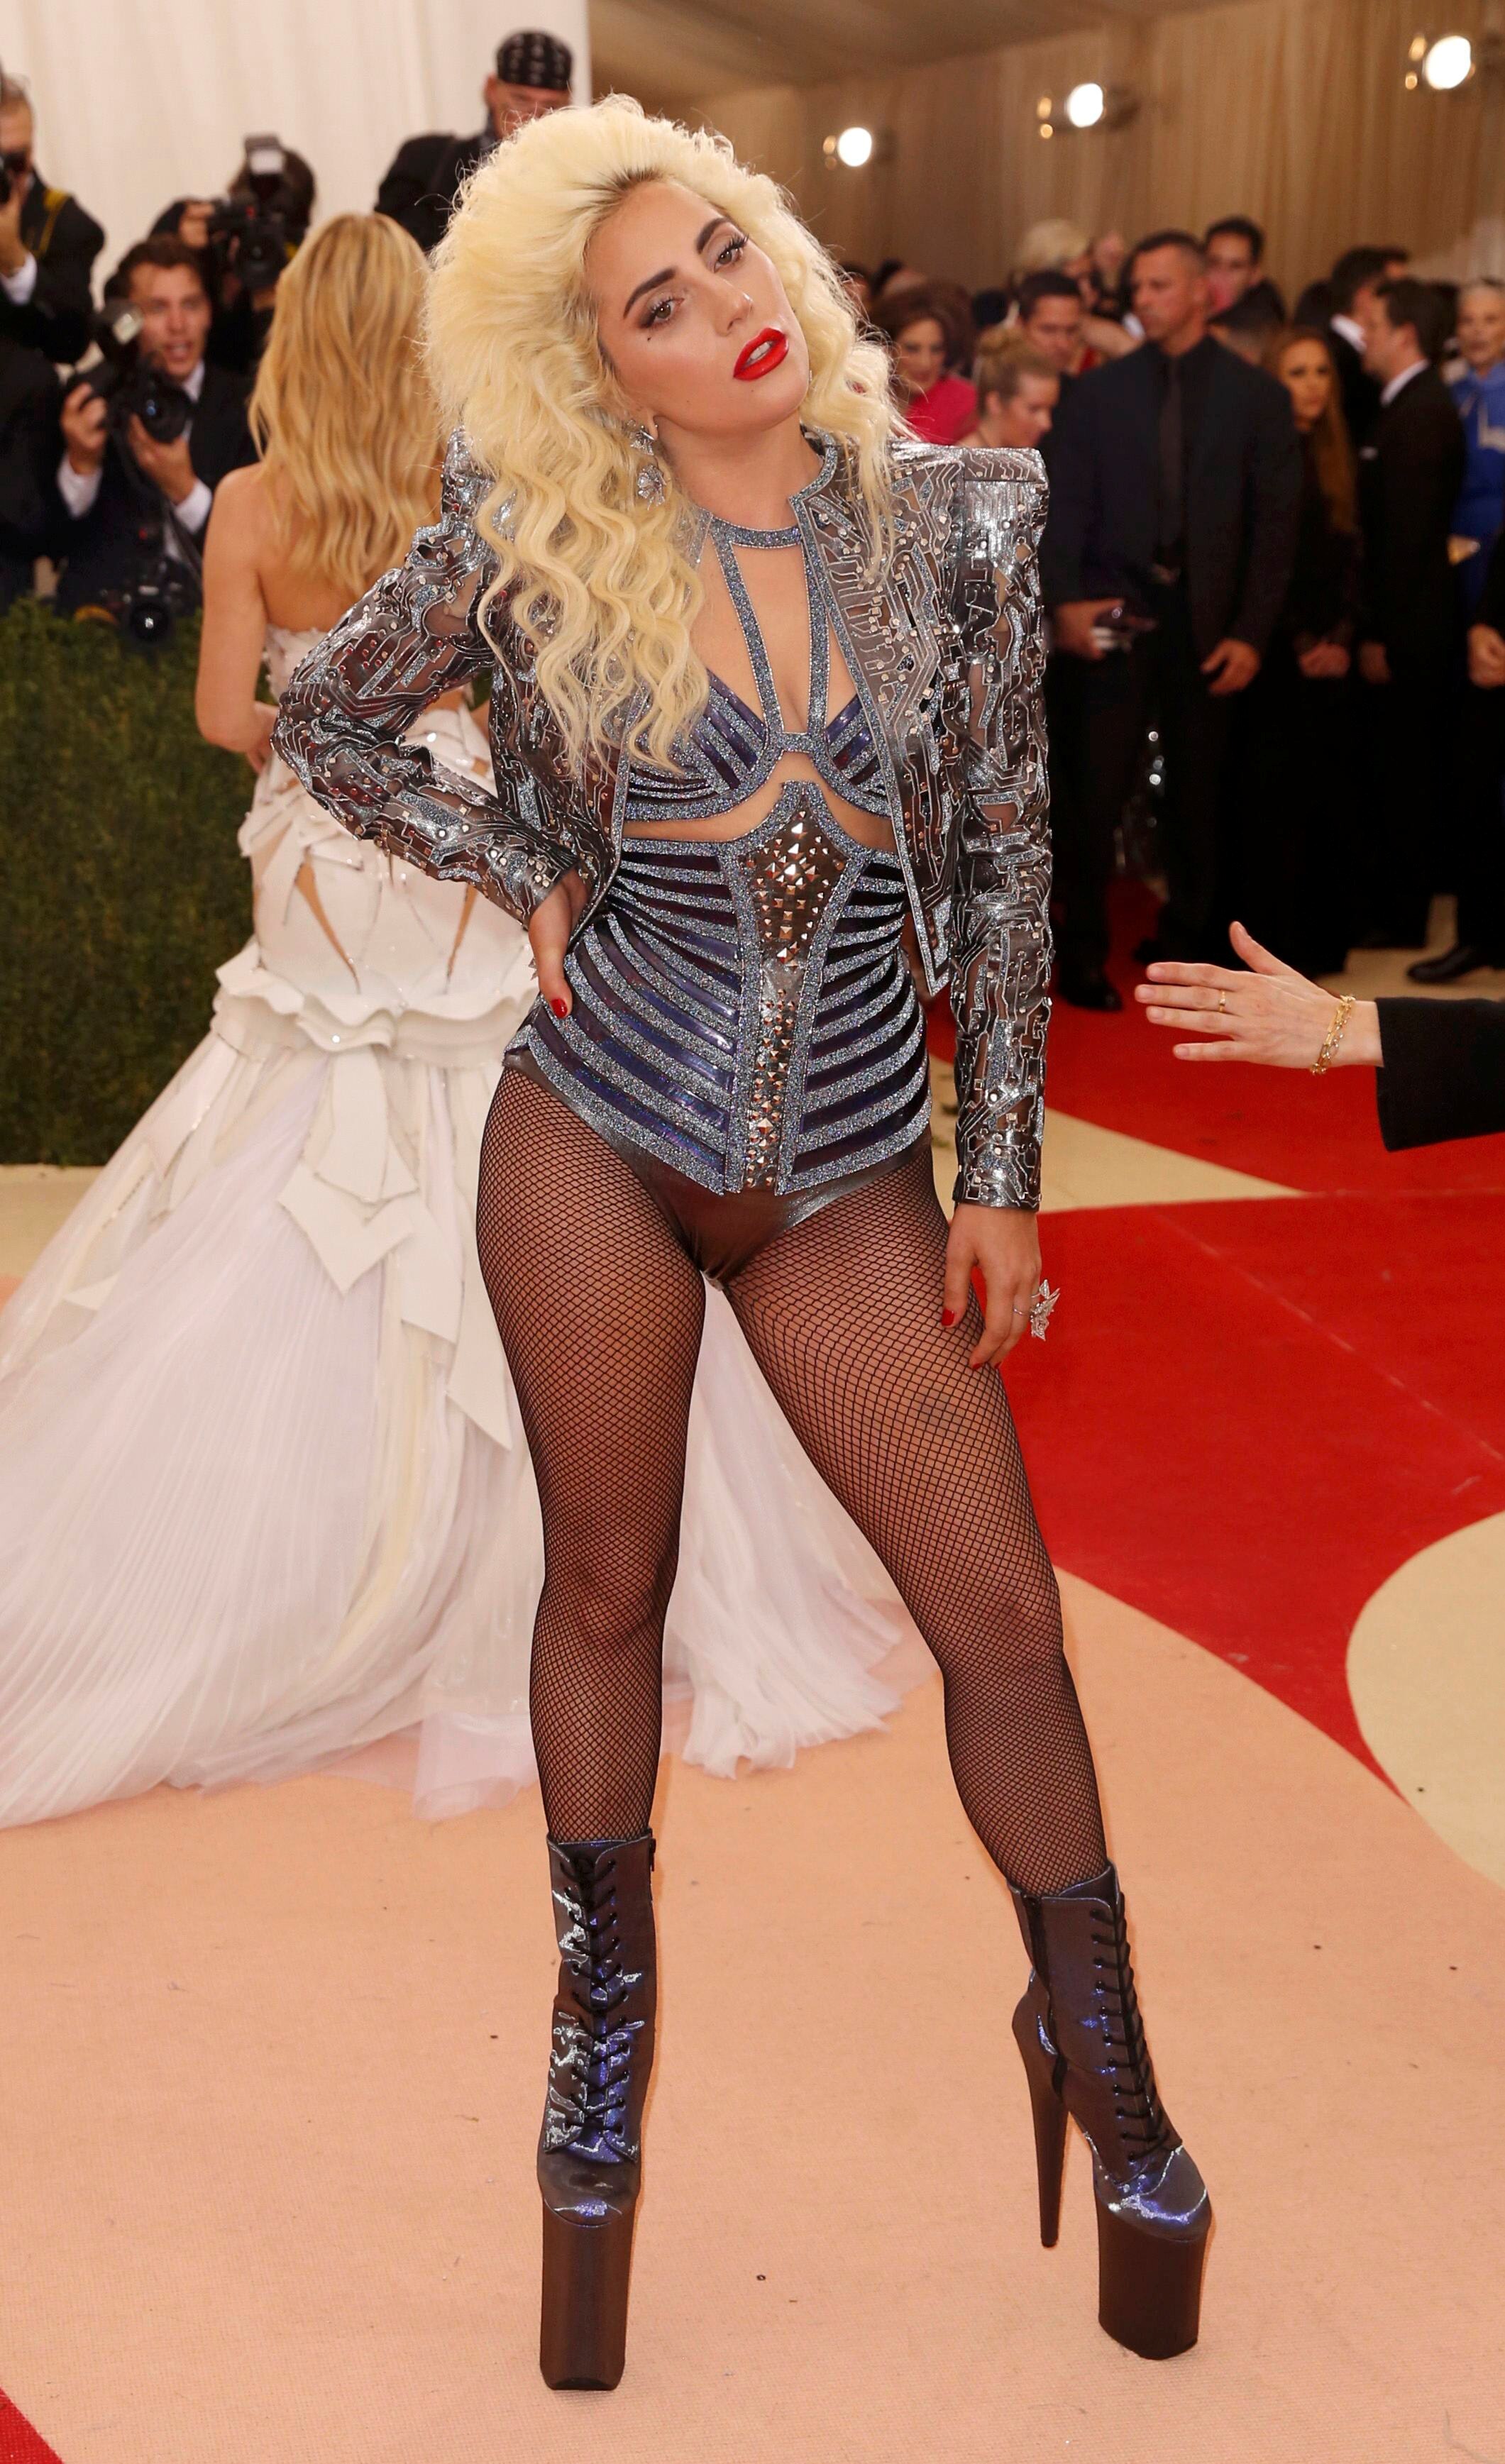 Lady Gaga wearing big silver platform heels and a metallic long-sleeved bodysuit